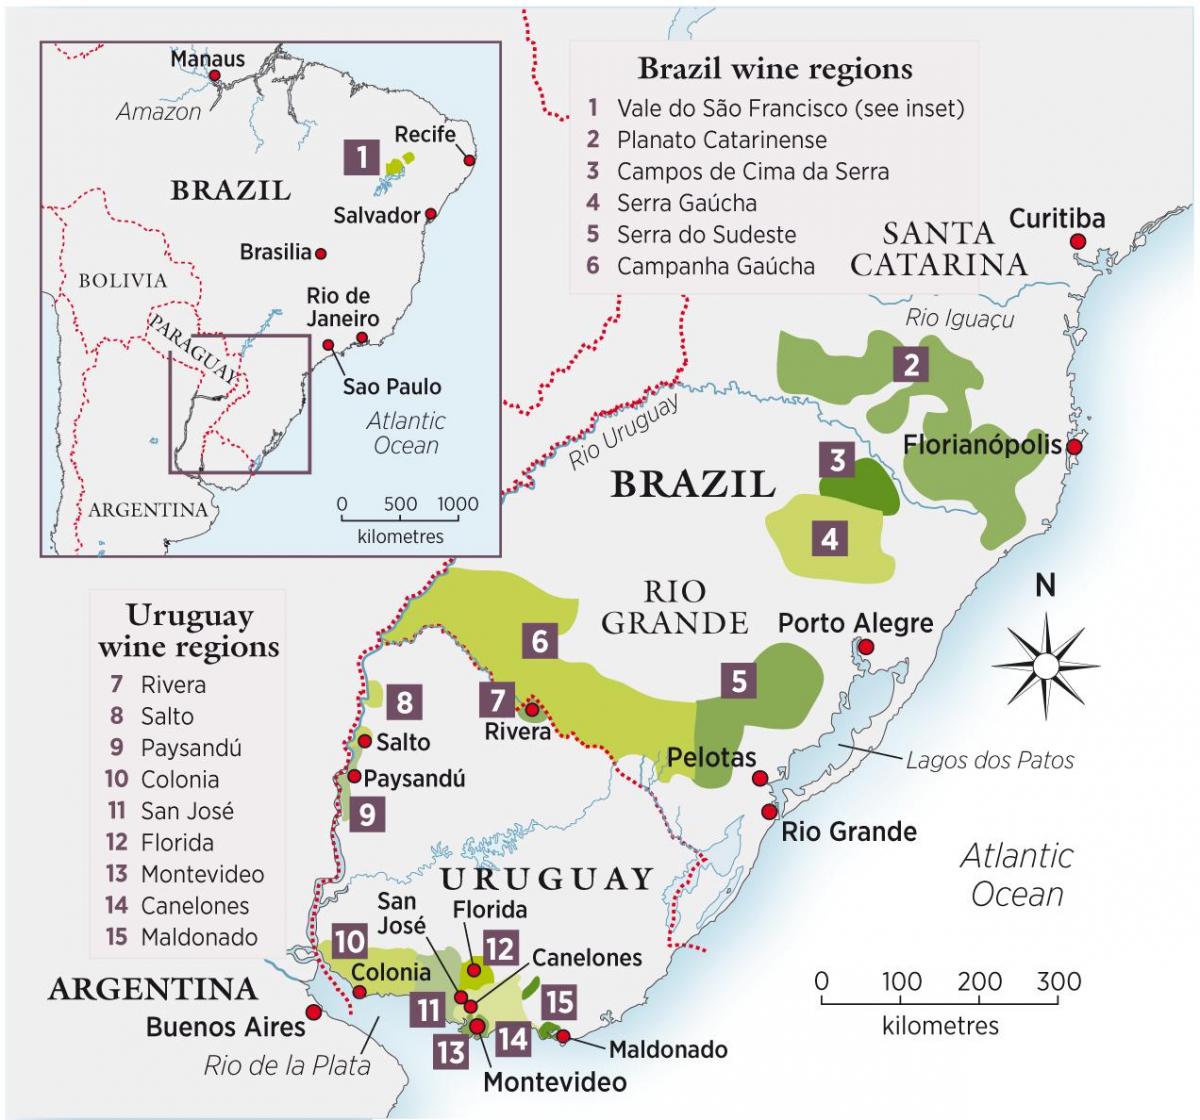 Mapa de Uruguai viño